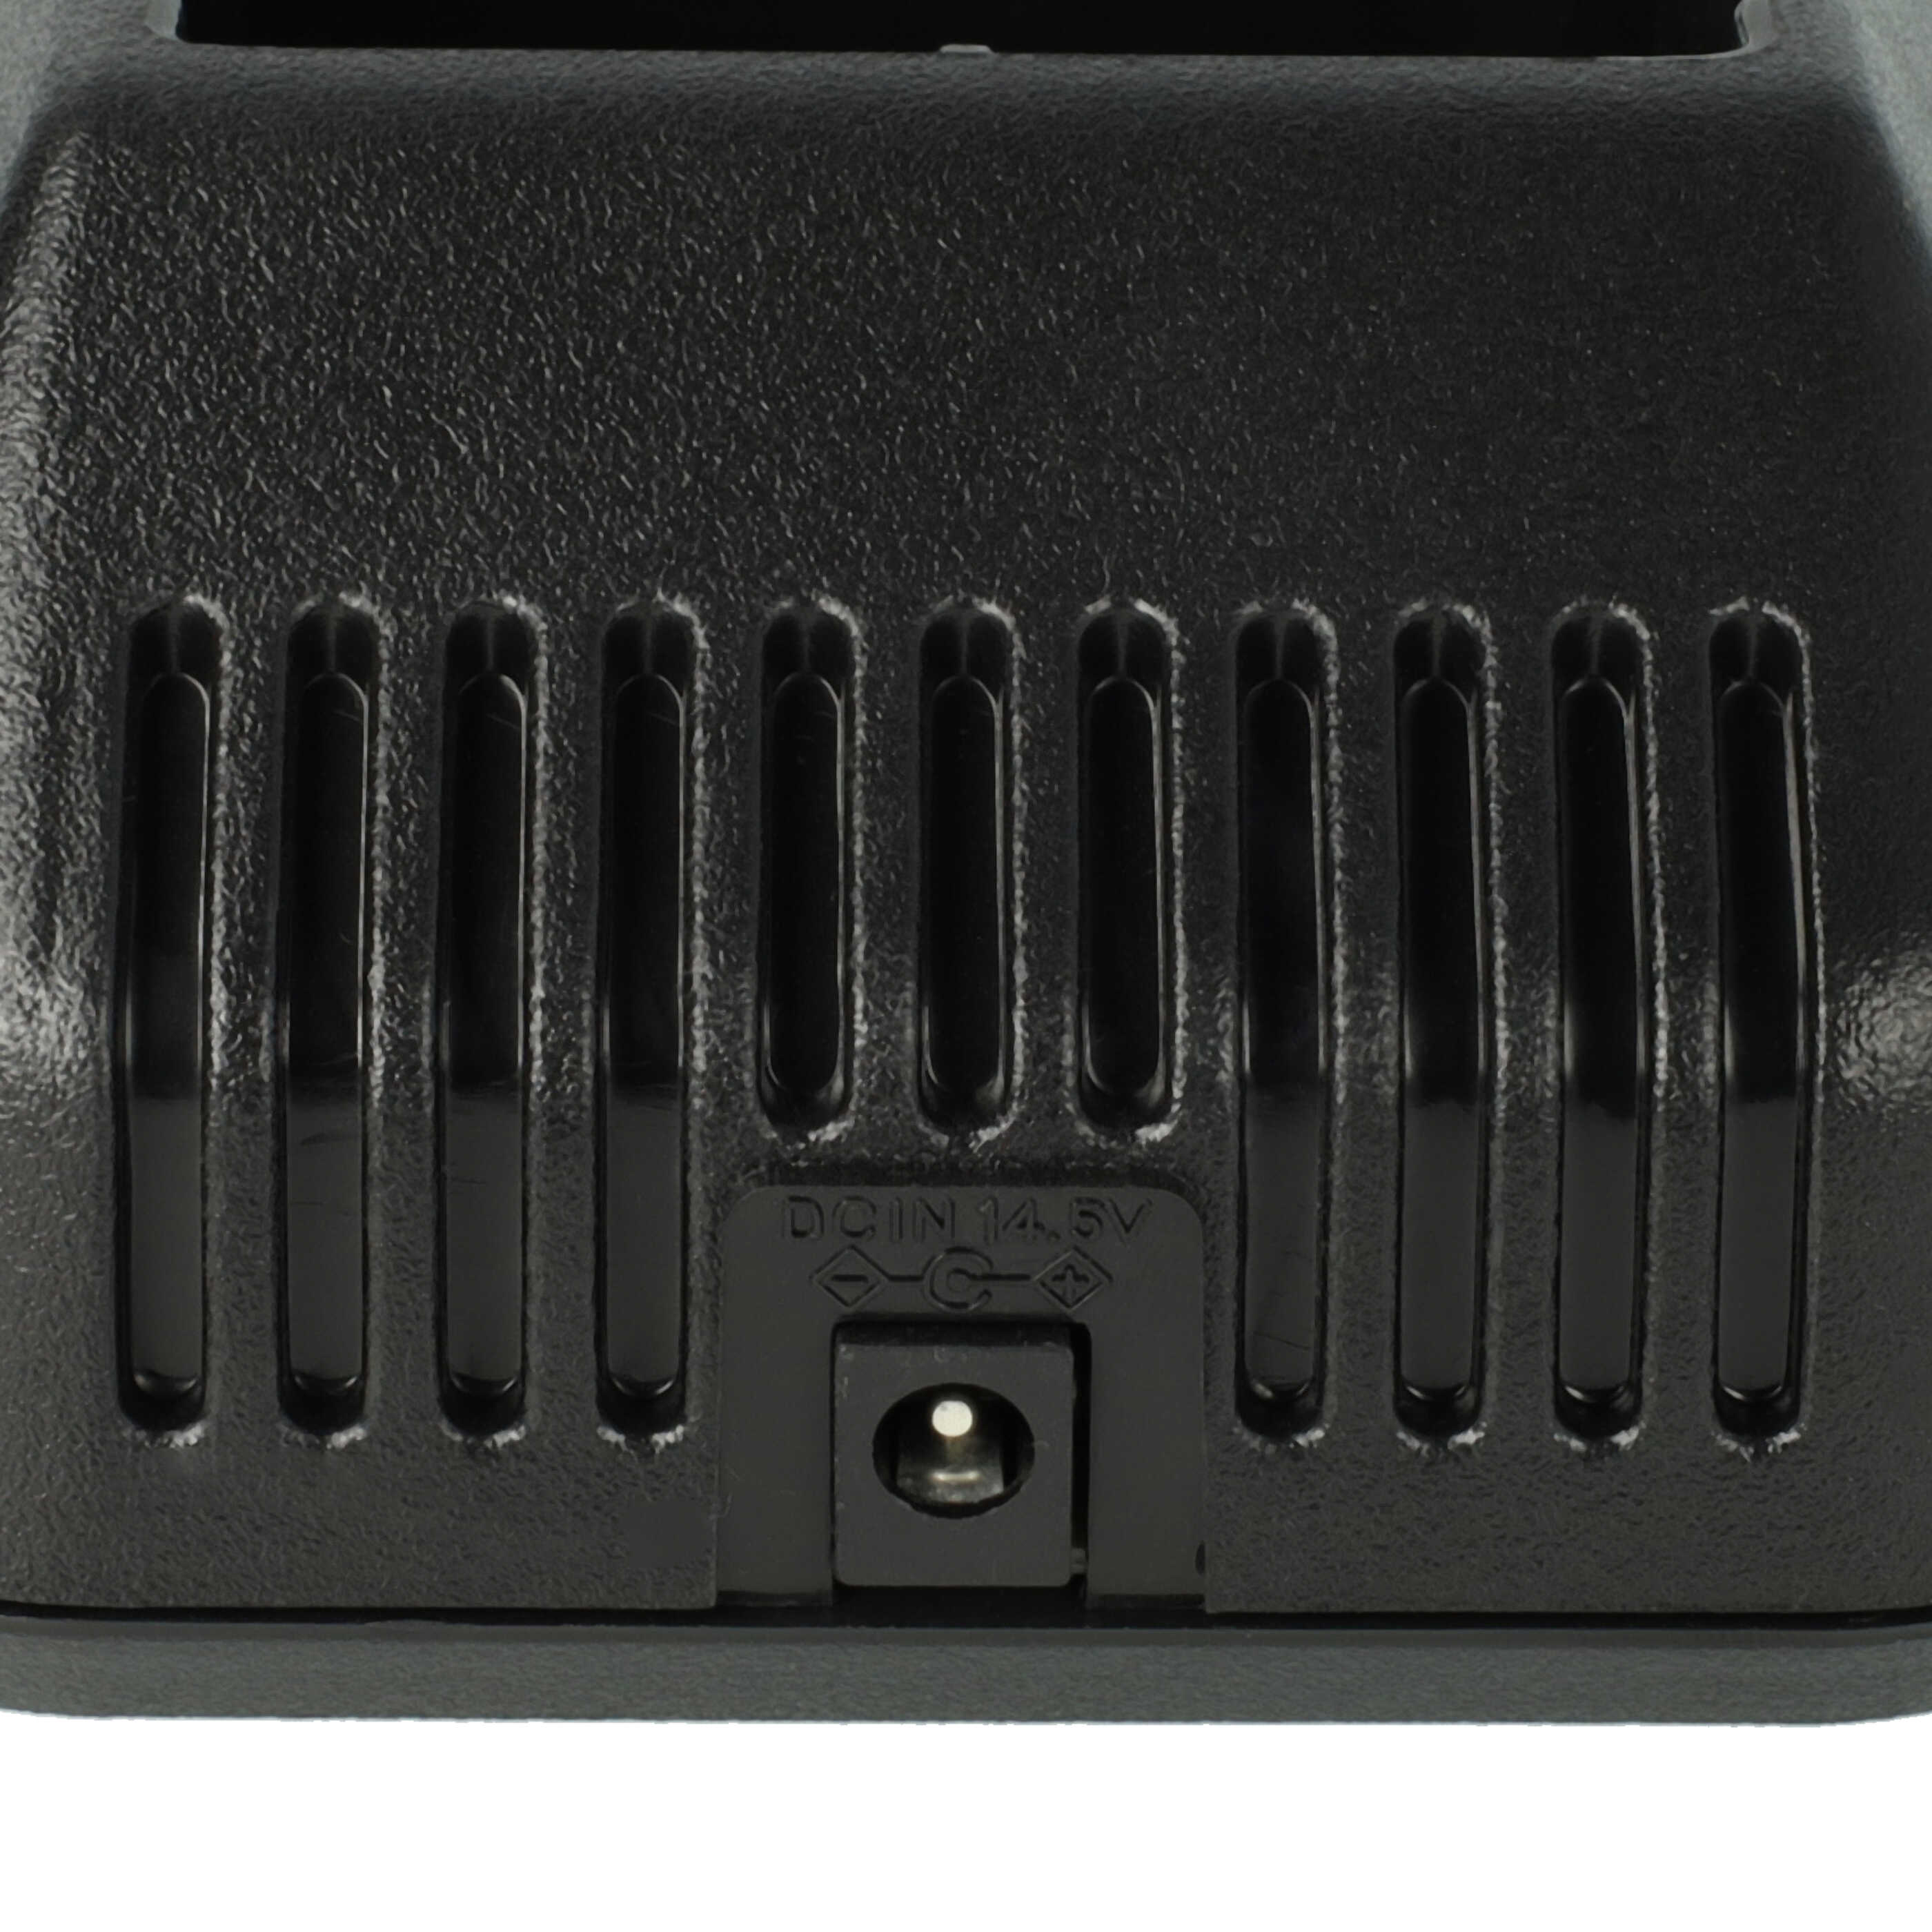 Charger Suitable for Kenwood TH-K2ET Radio Batteries - 15 V, 1.0 A